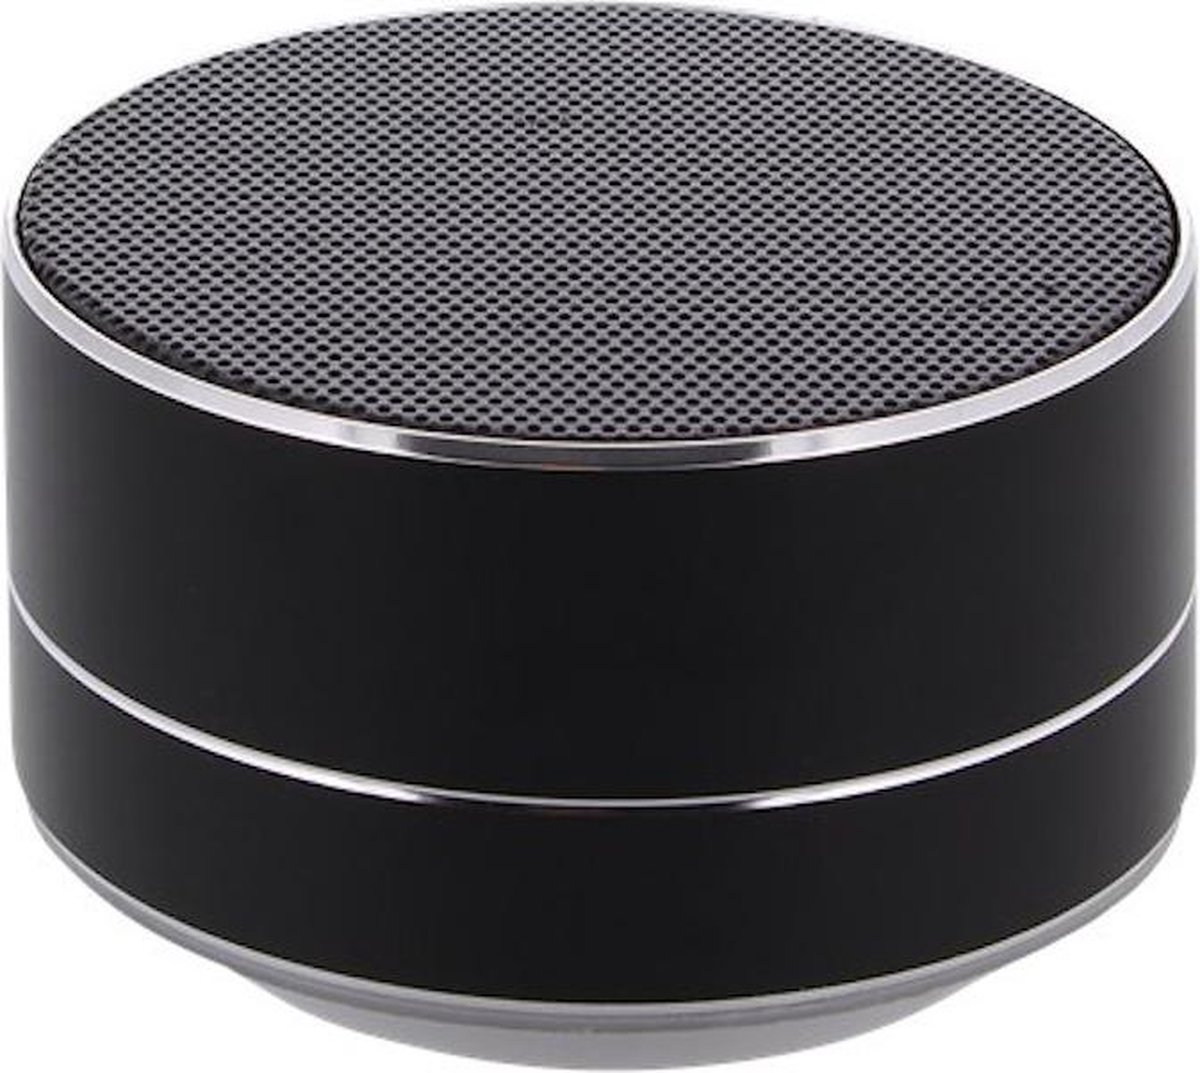 S&C - Bluetooth speaker zwart klein mini draadloze speaker muziek audio